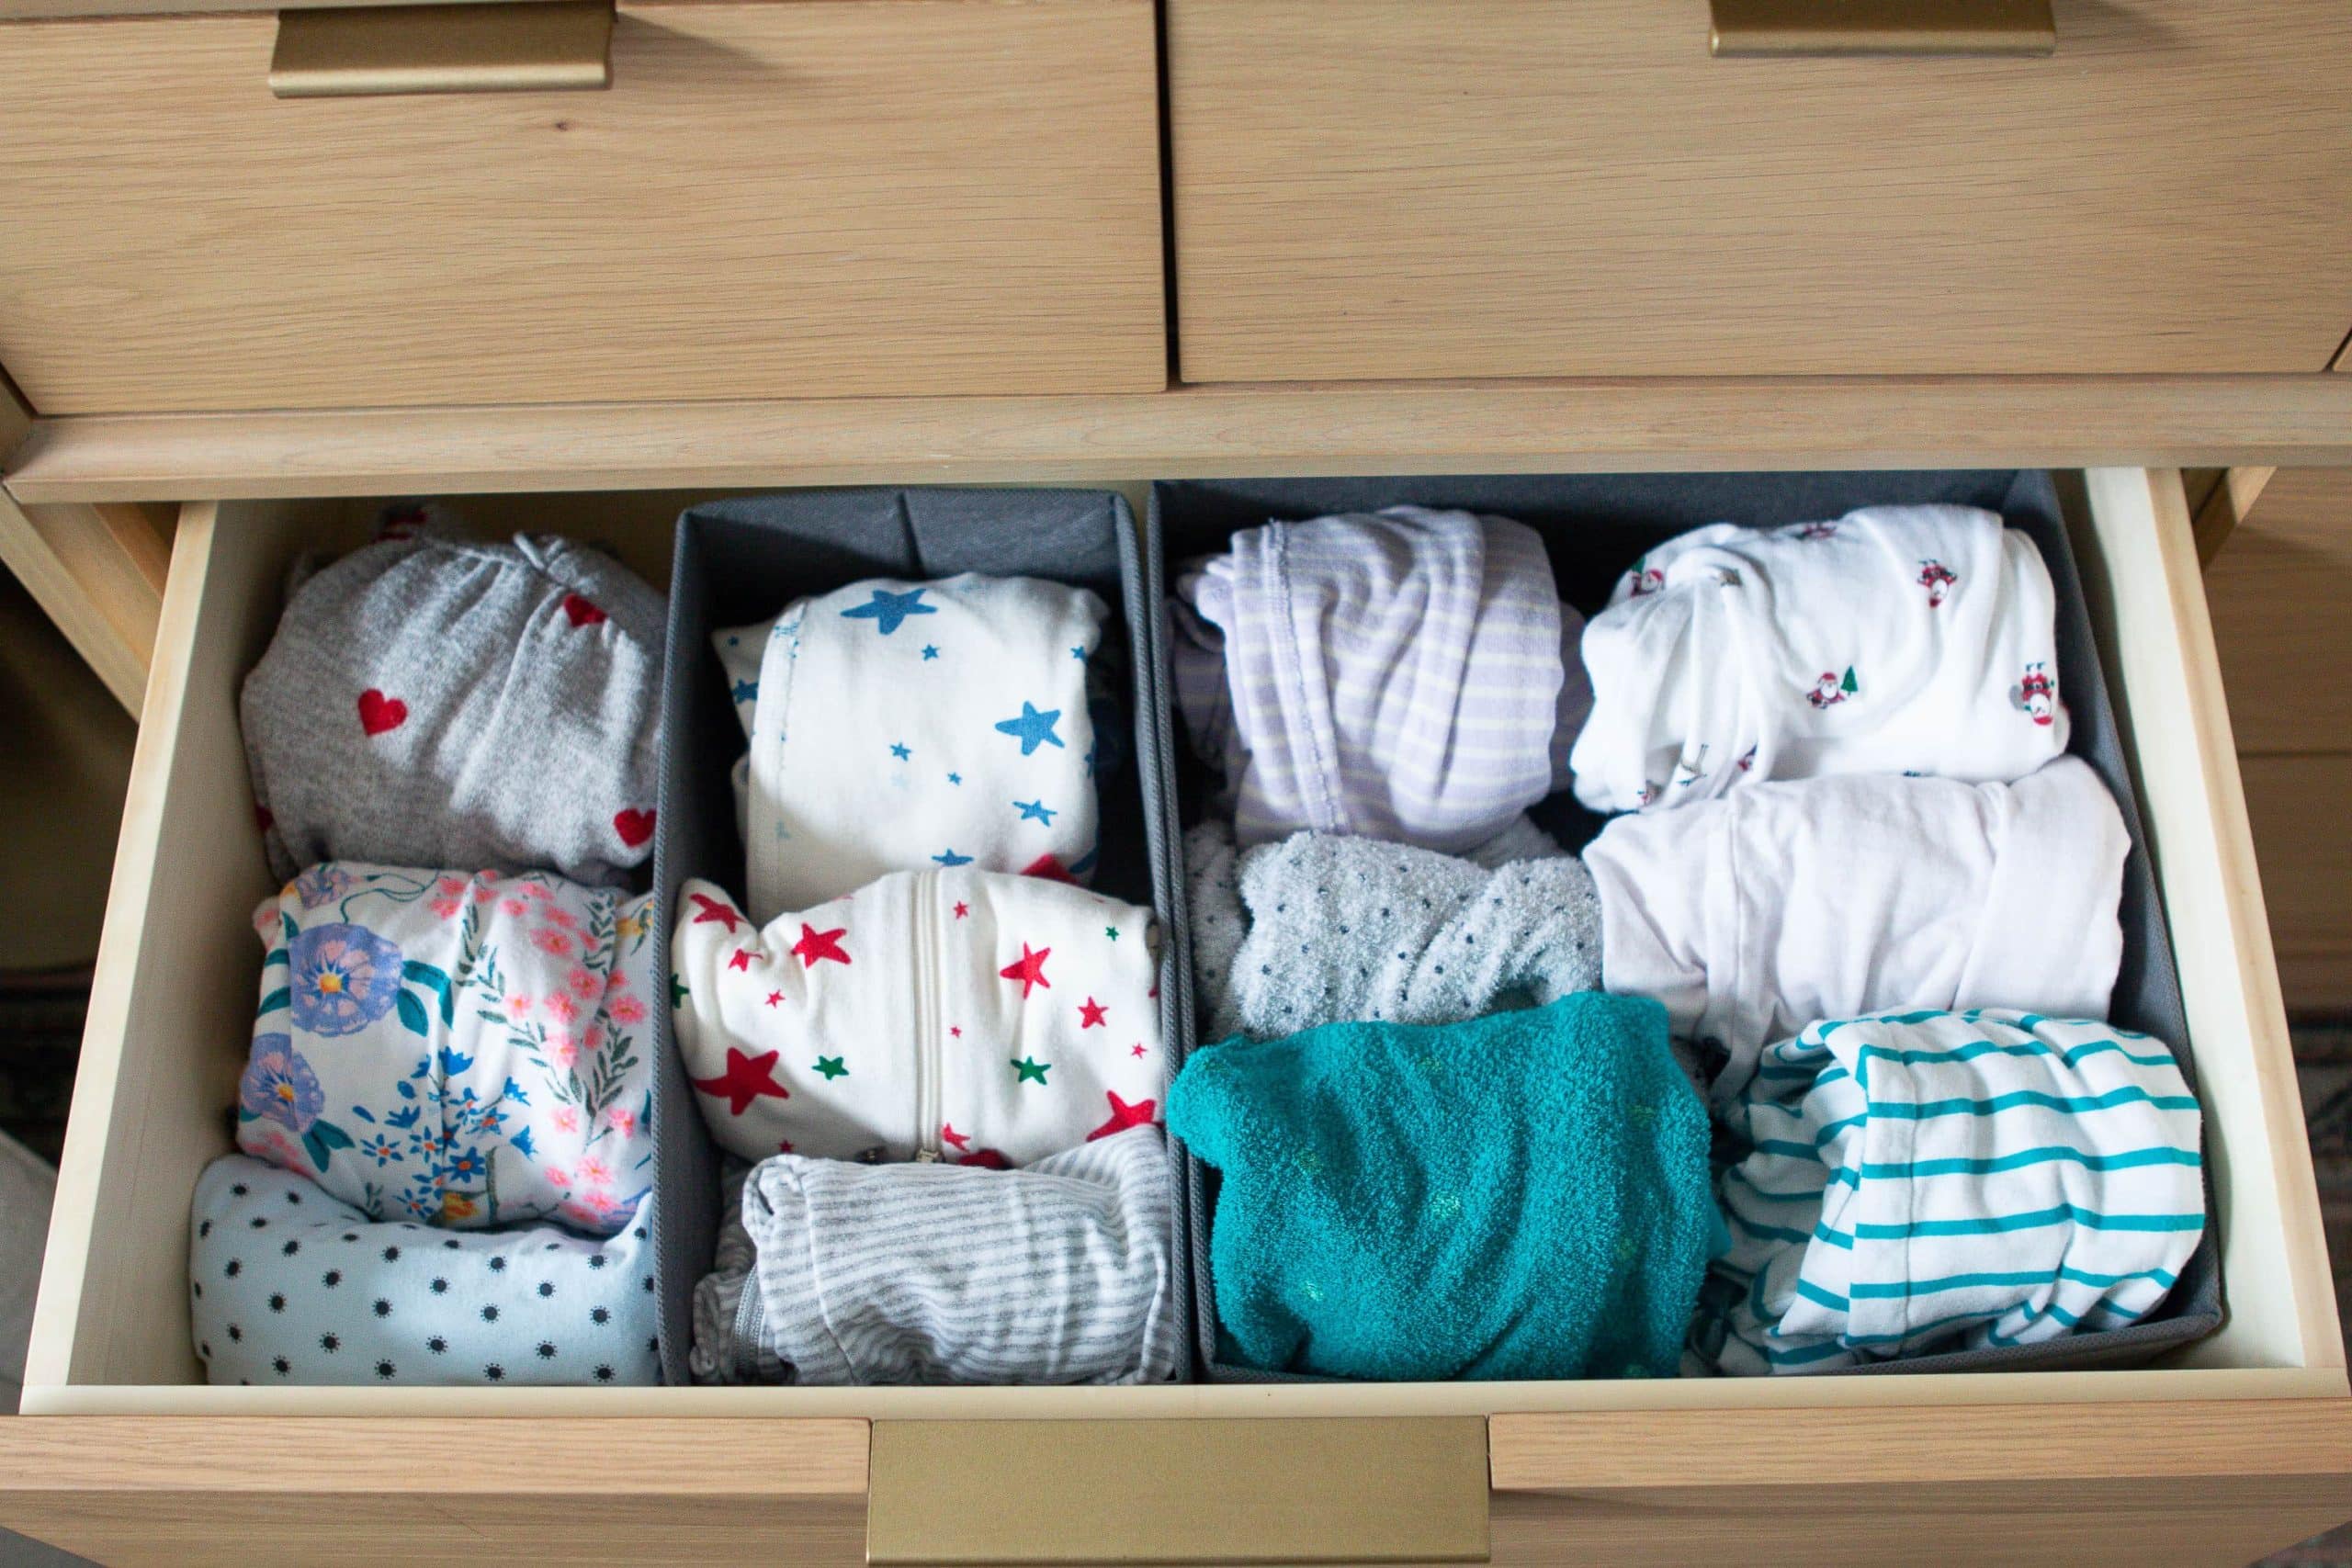 Organizing baby onesies in a dresser drawer